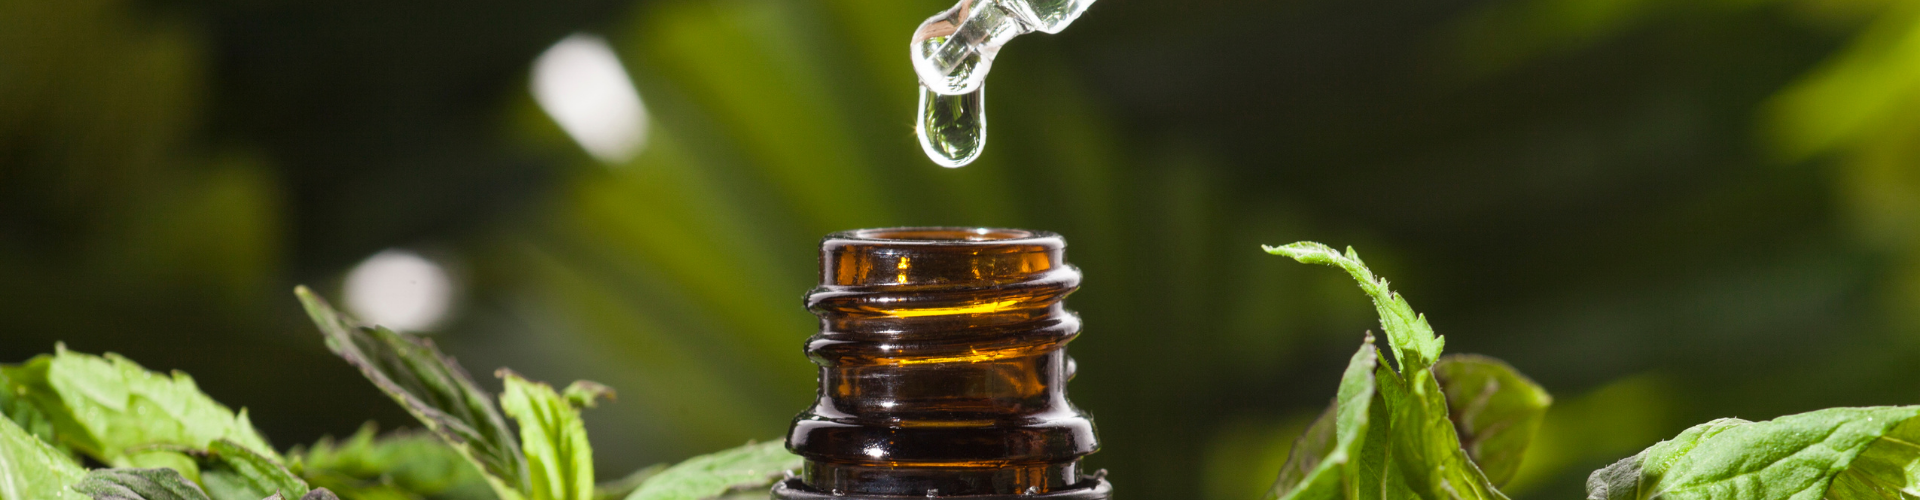 MigreLief Migraine Stick  Essential Oils for Migraine Sufferers